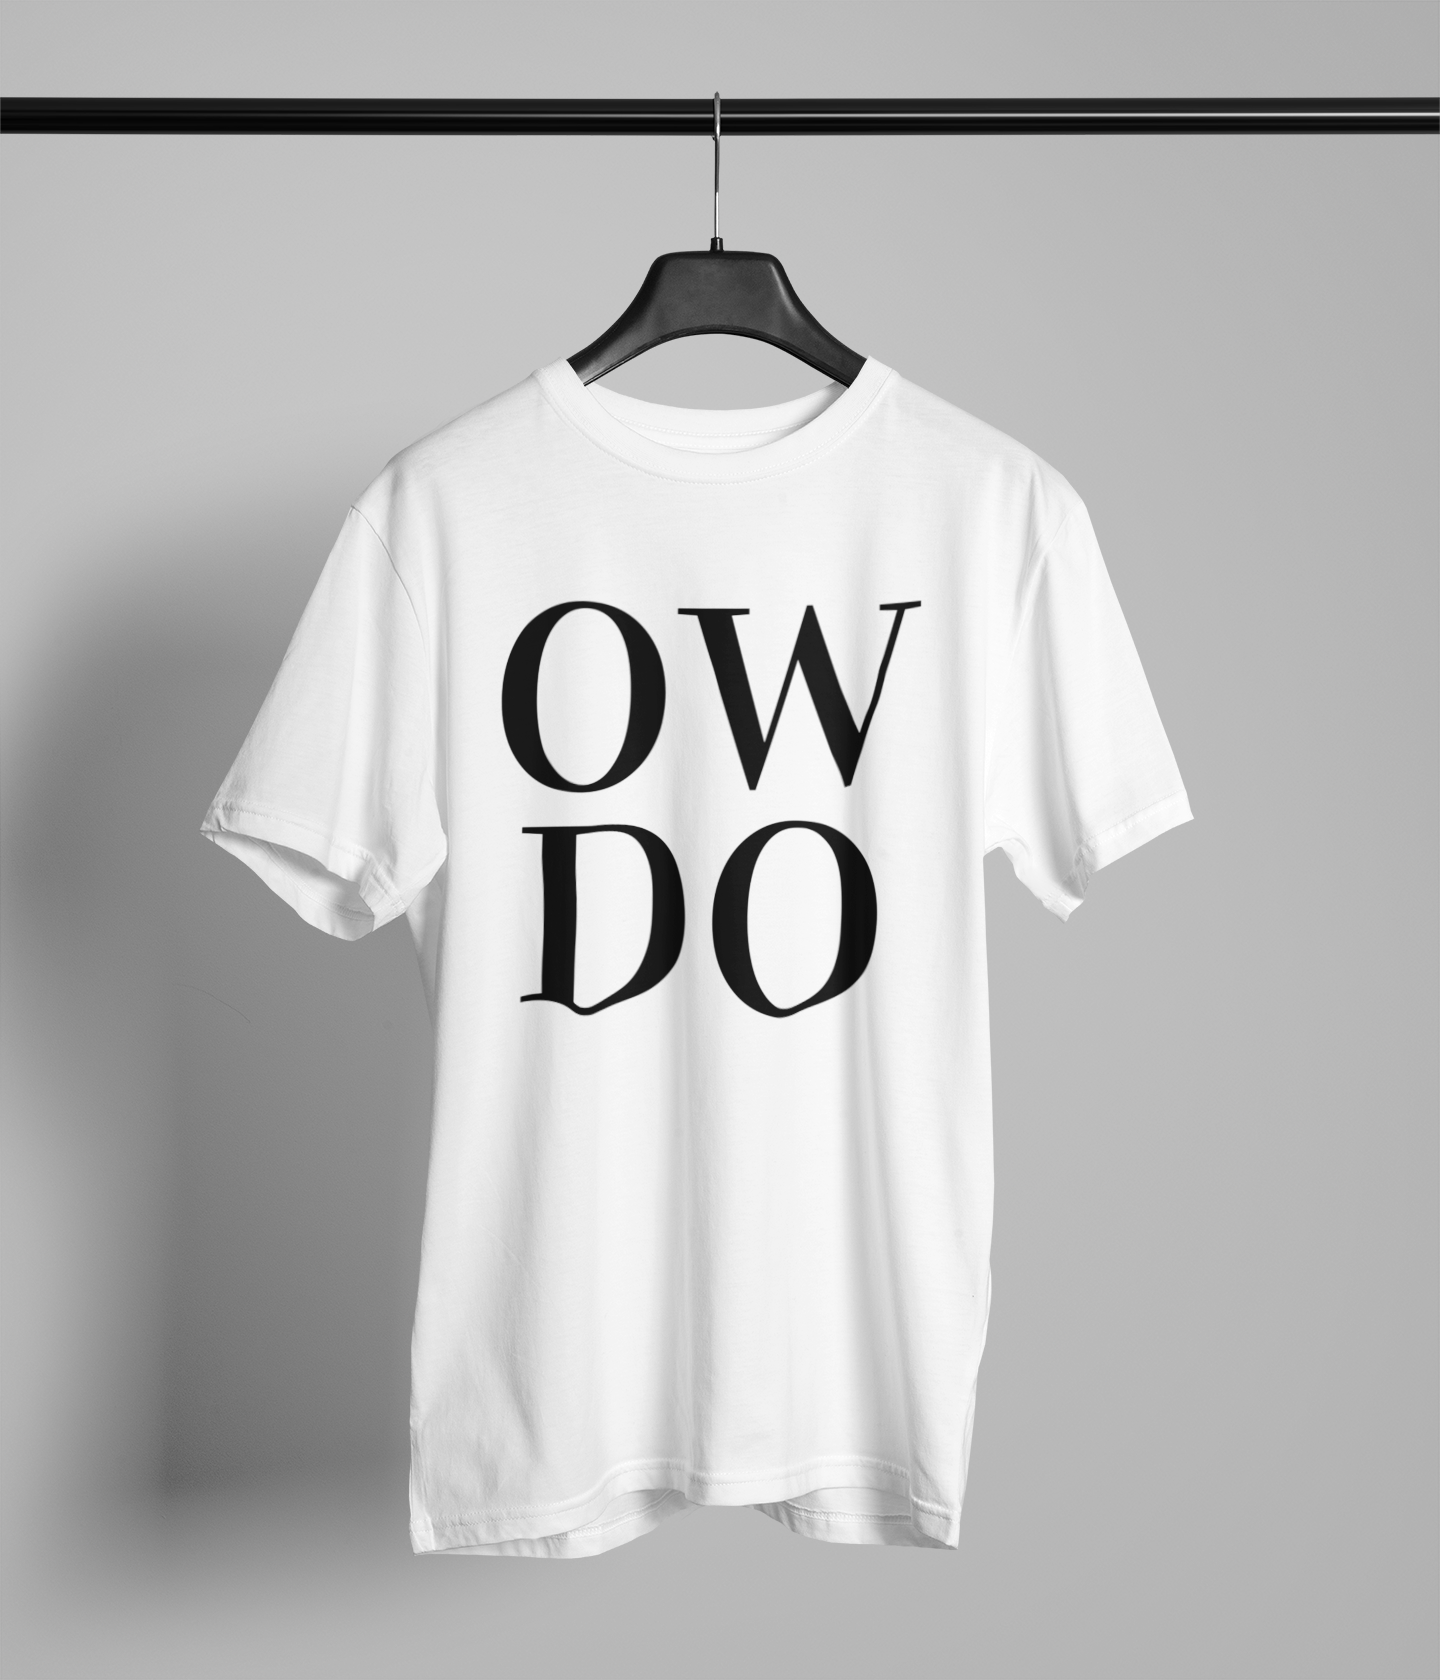 OW DO Northern Slang T-shirt Unisex